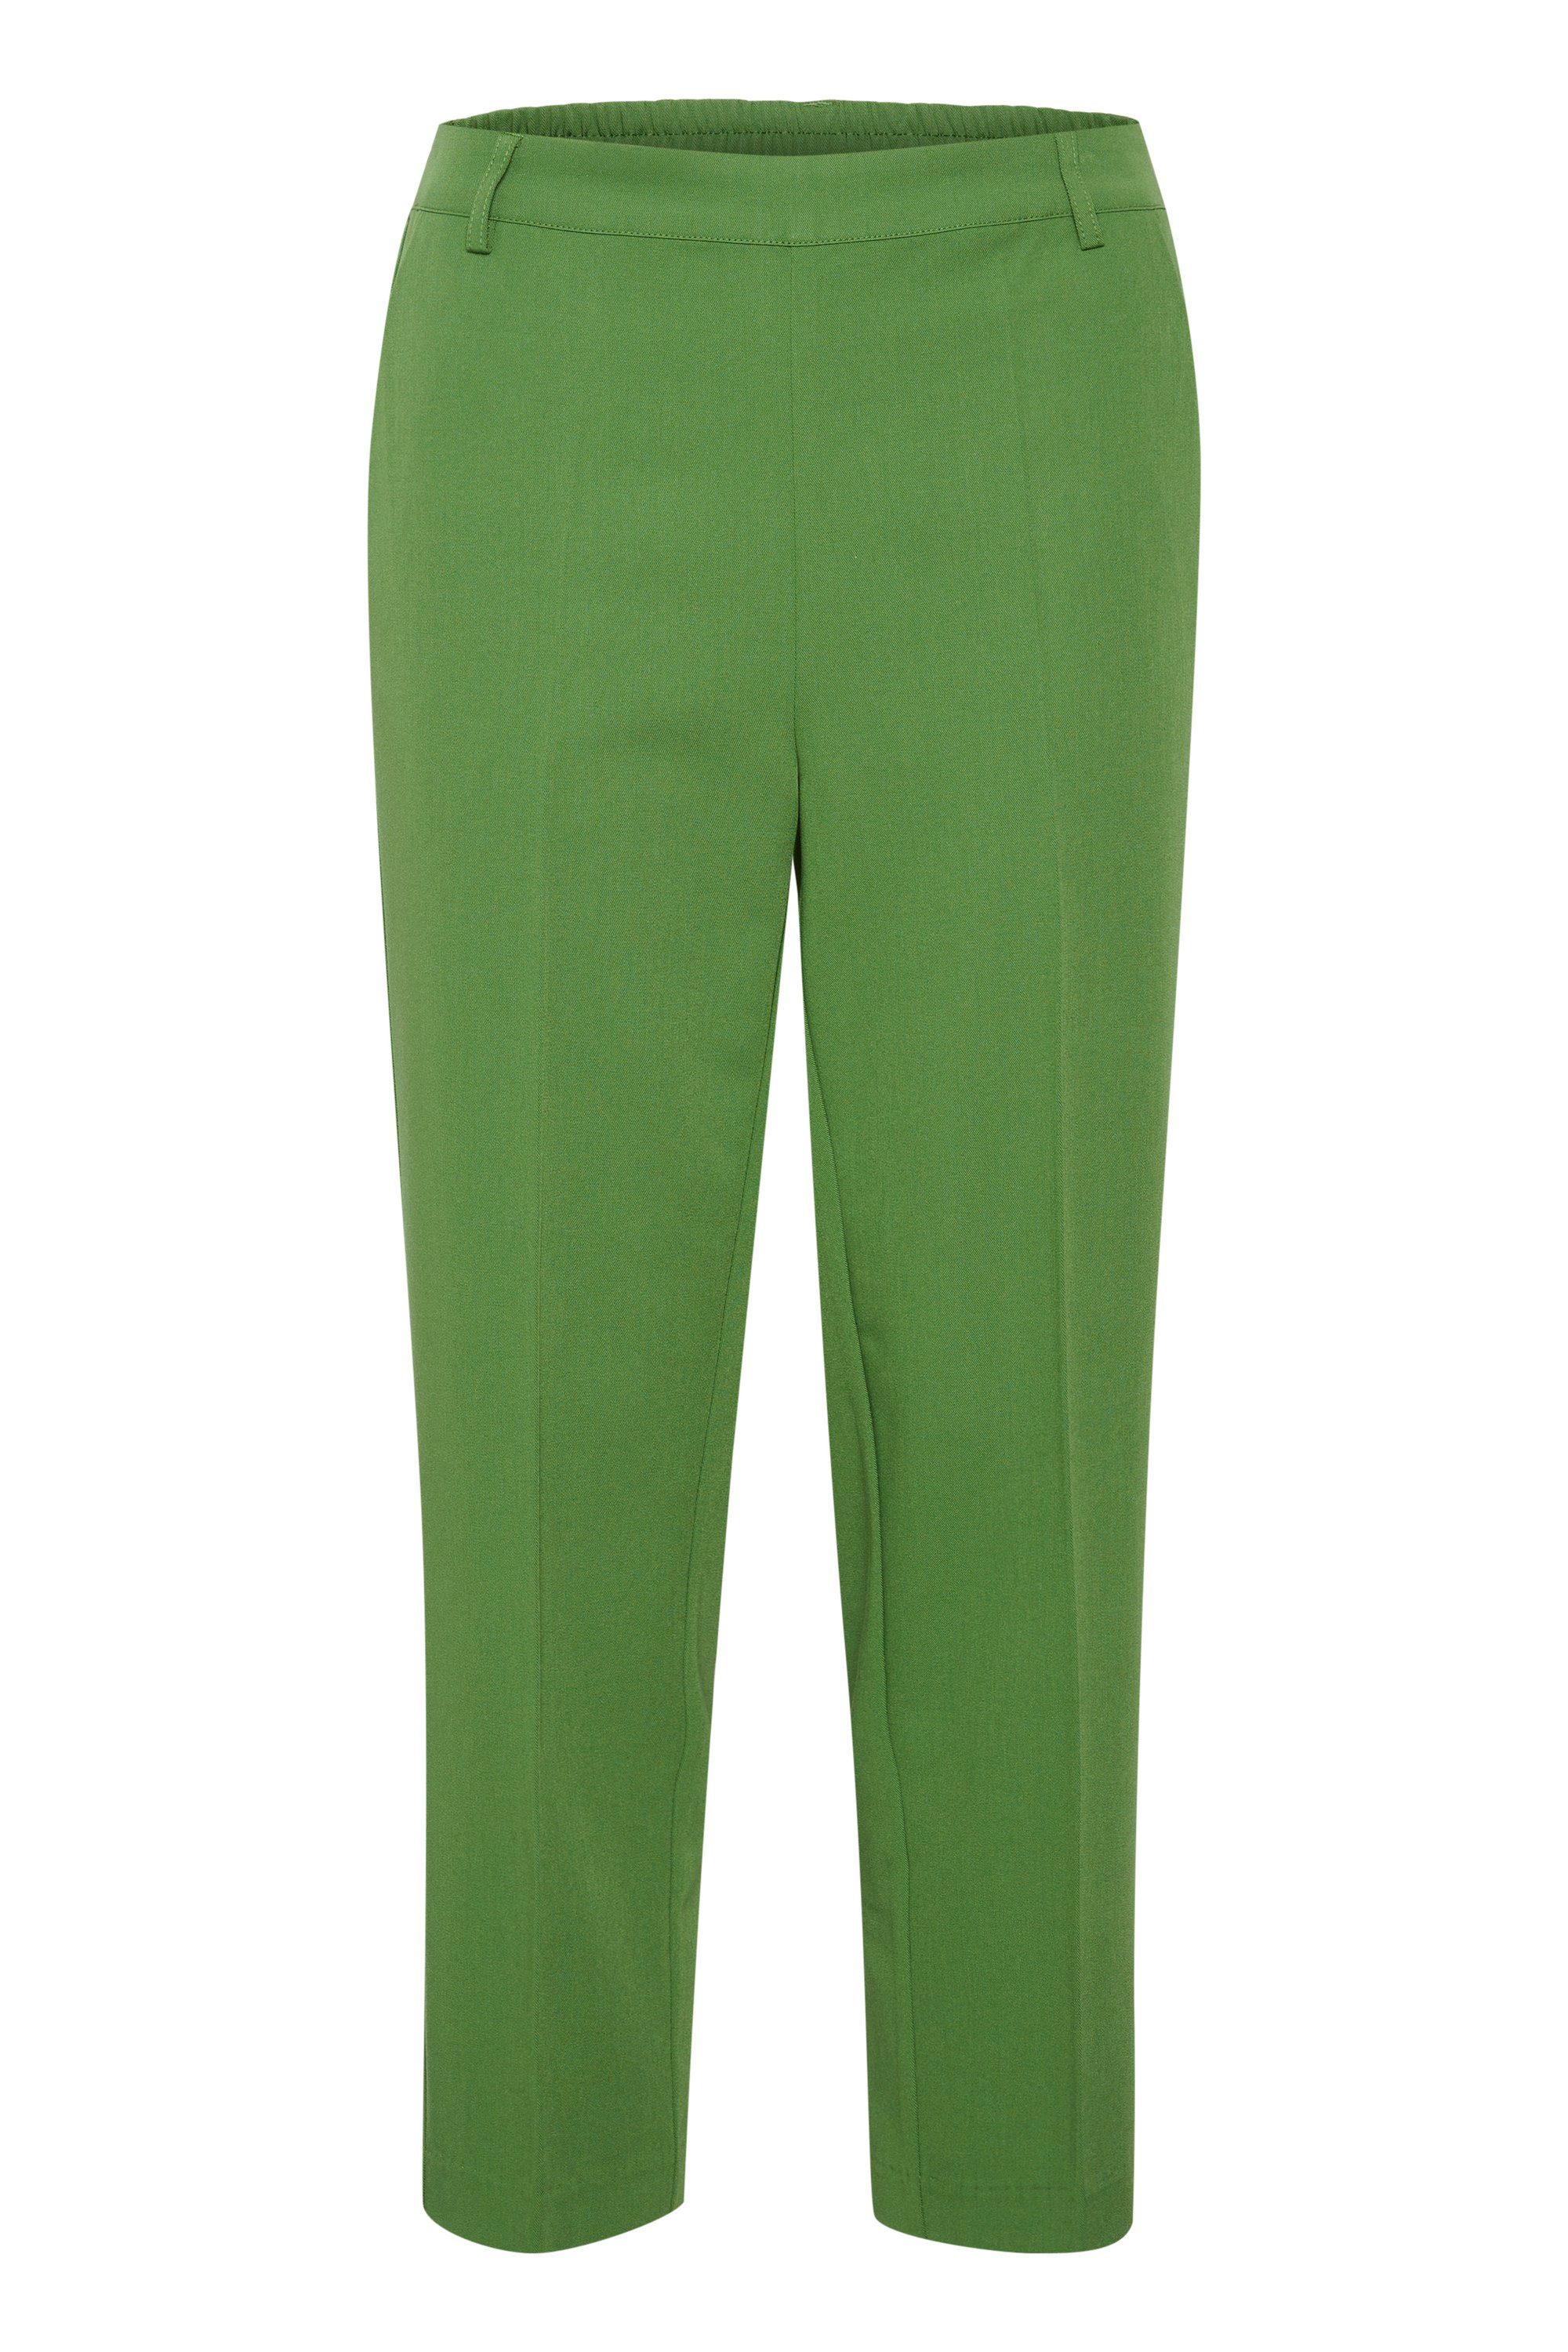 KAFFE Anzughose Pants Suiting KAsakura Artichoke Green | Anzughosen